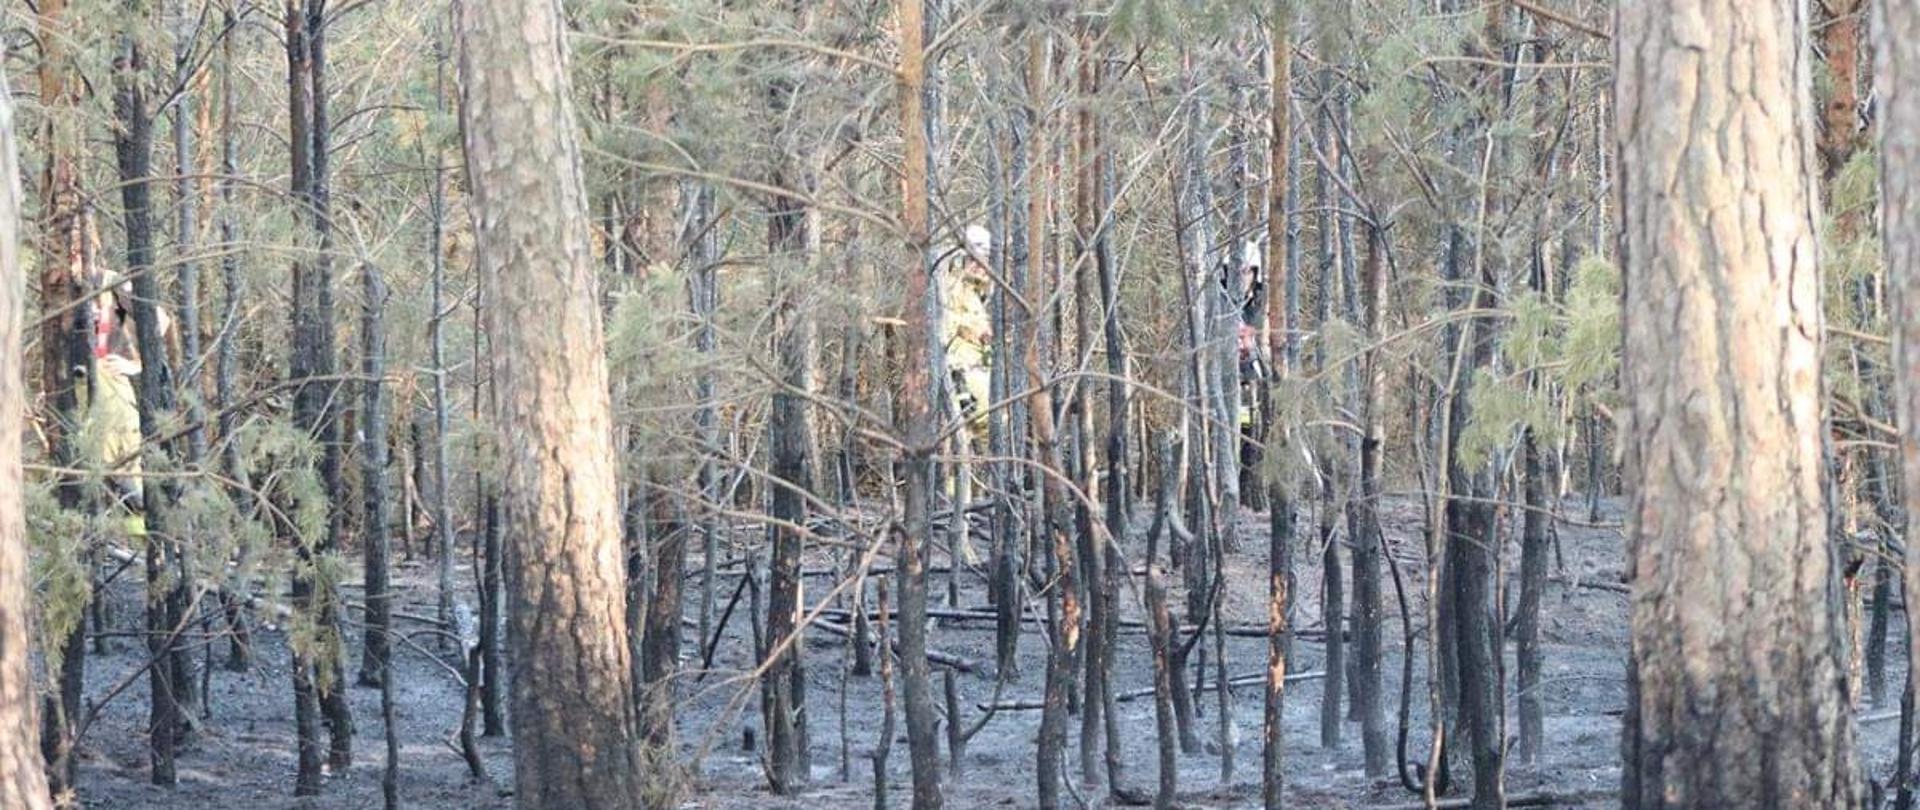 Spalony las, w tle strażacy